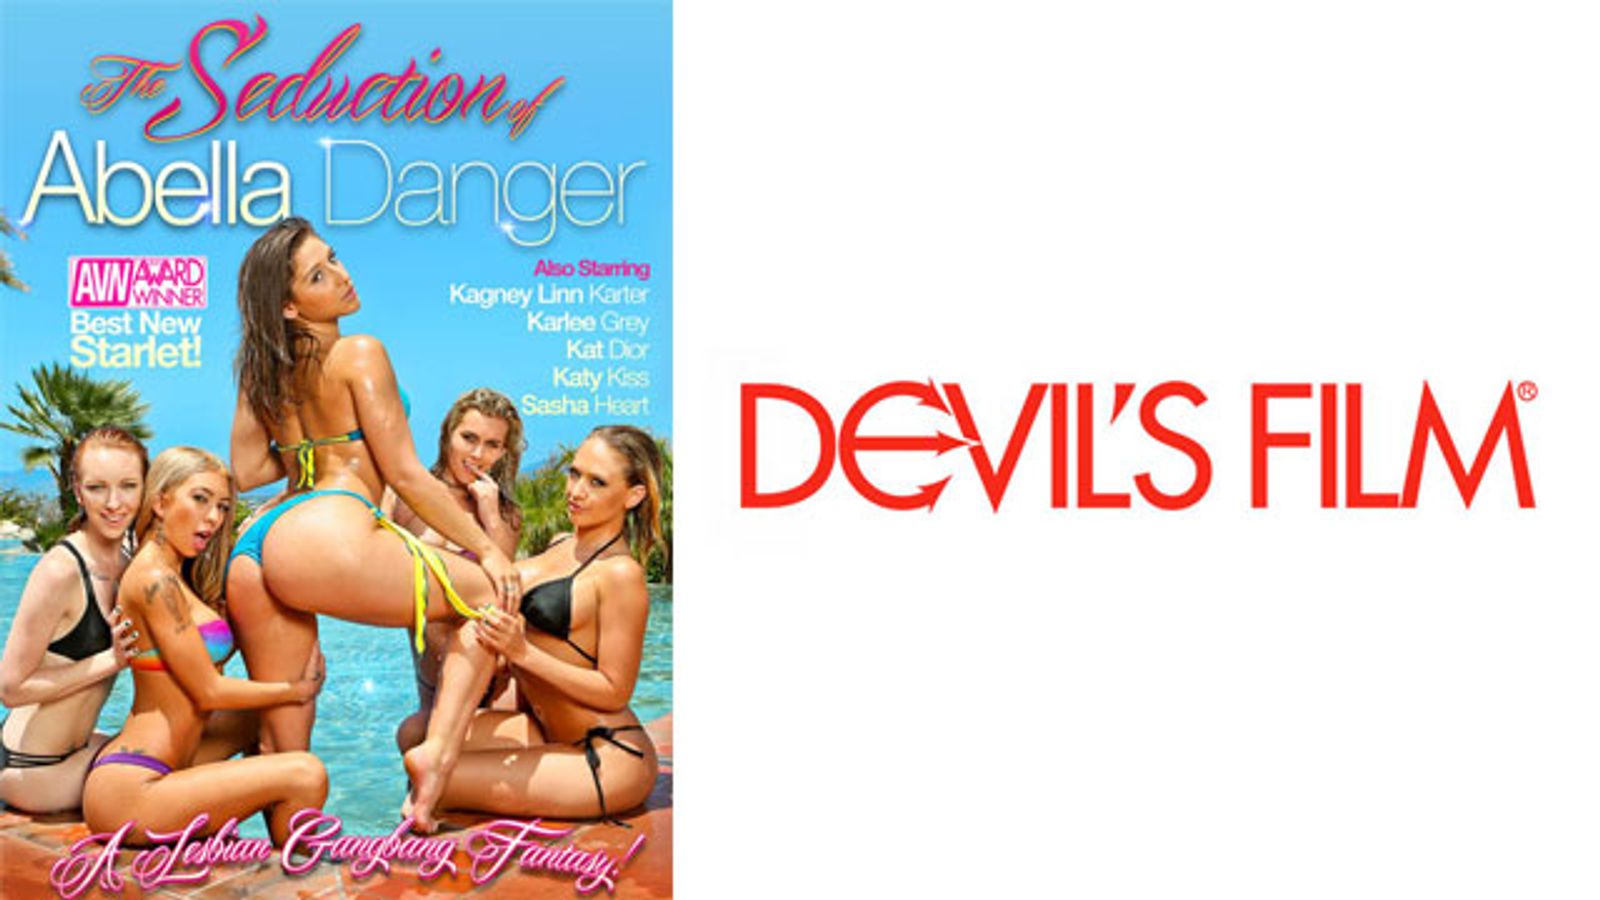 Devil's Film's Latest 'Seduction' Showcases Abella Danger